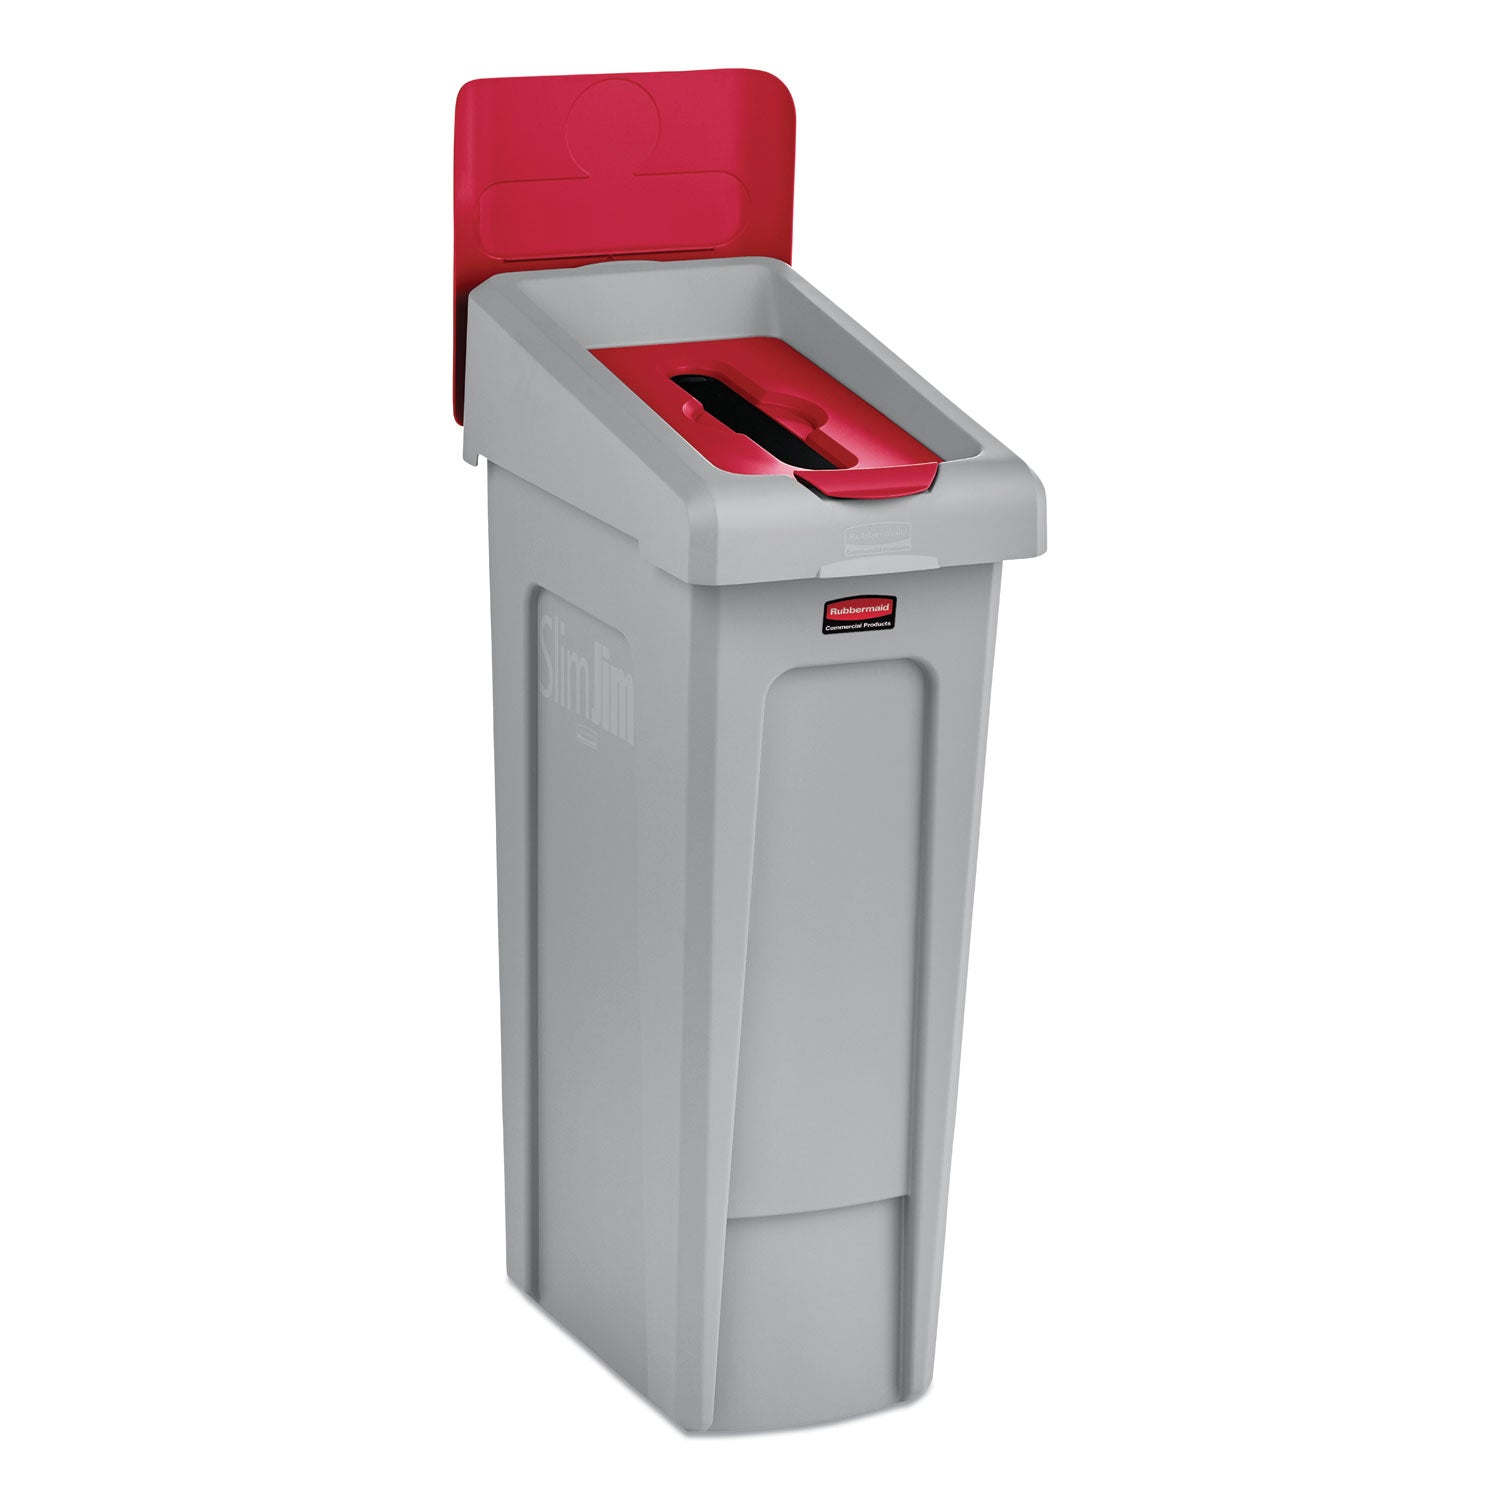 slim-jim-paper-recycling-top-165-x-8-x-05-red_rcp2007194 - 2